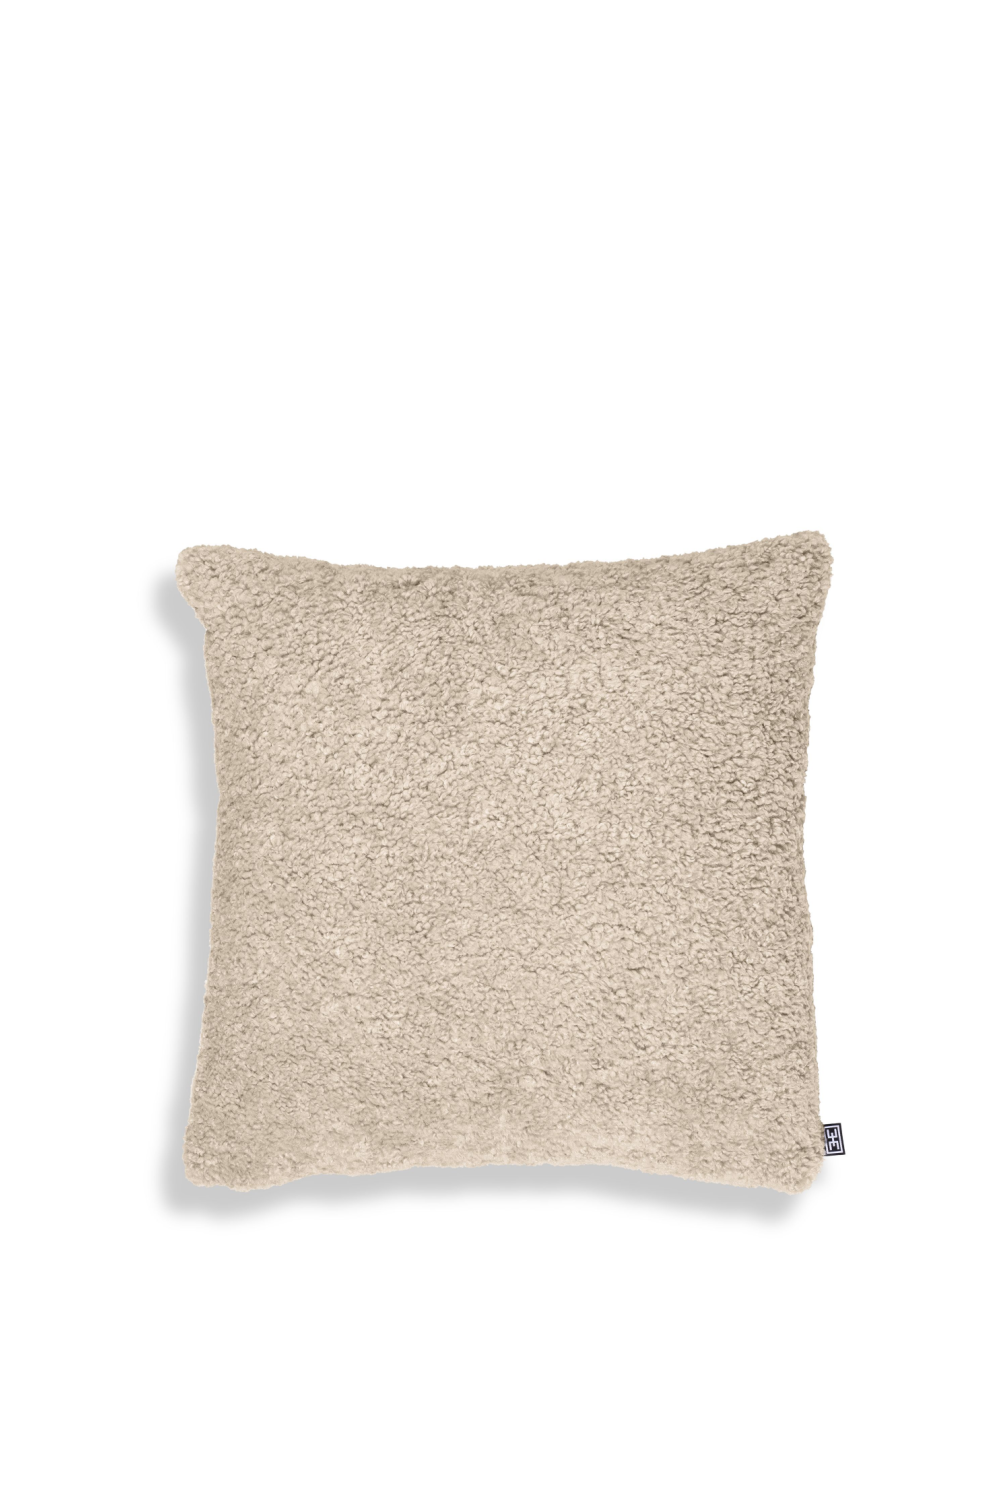 Square Sand Pillow | Eichholtz Canberra S | OROA